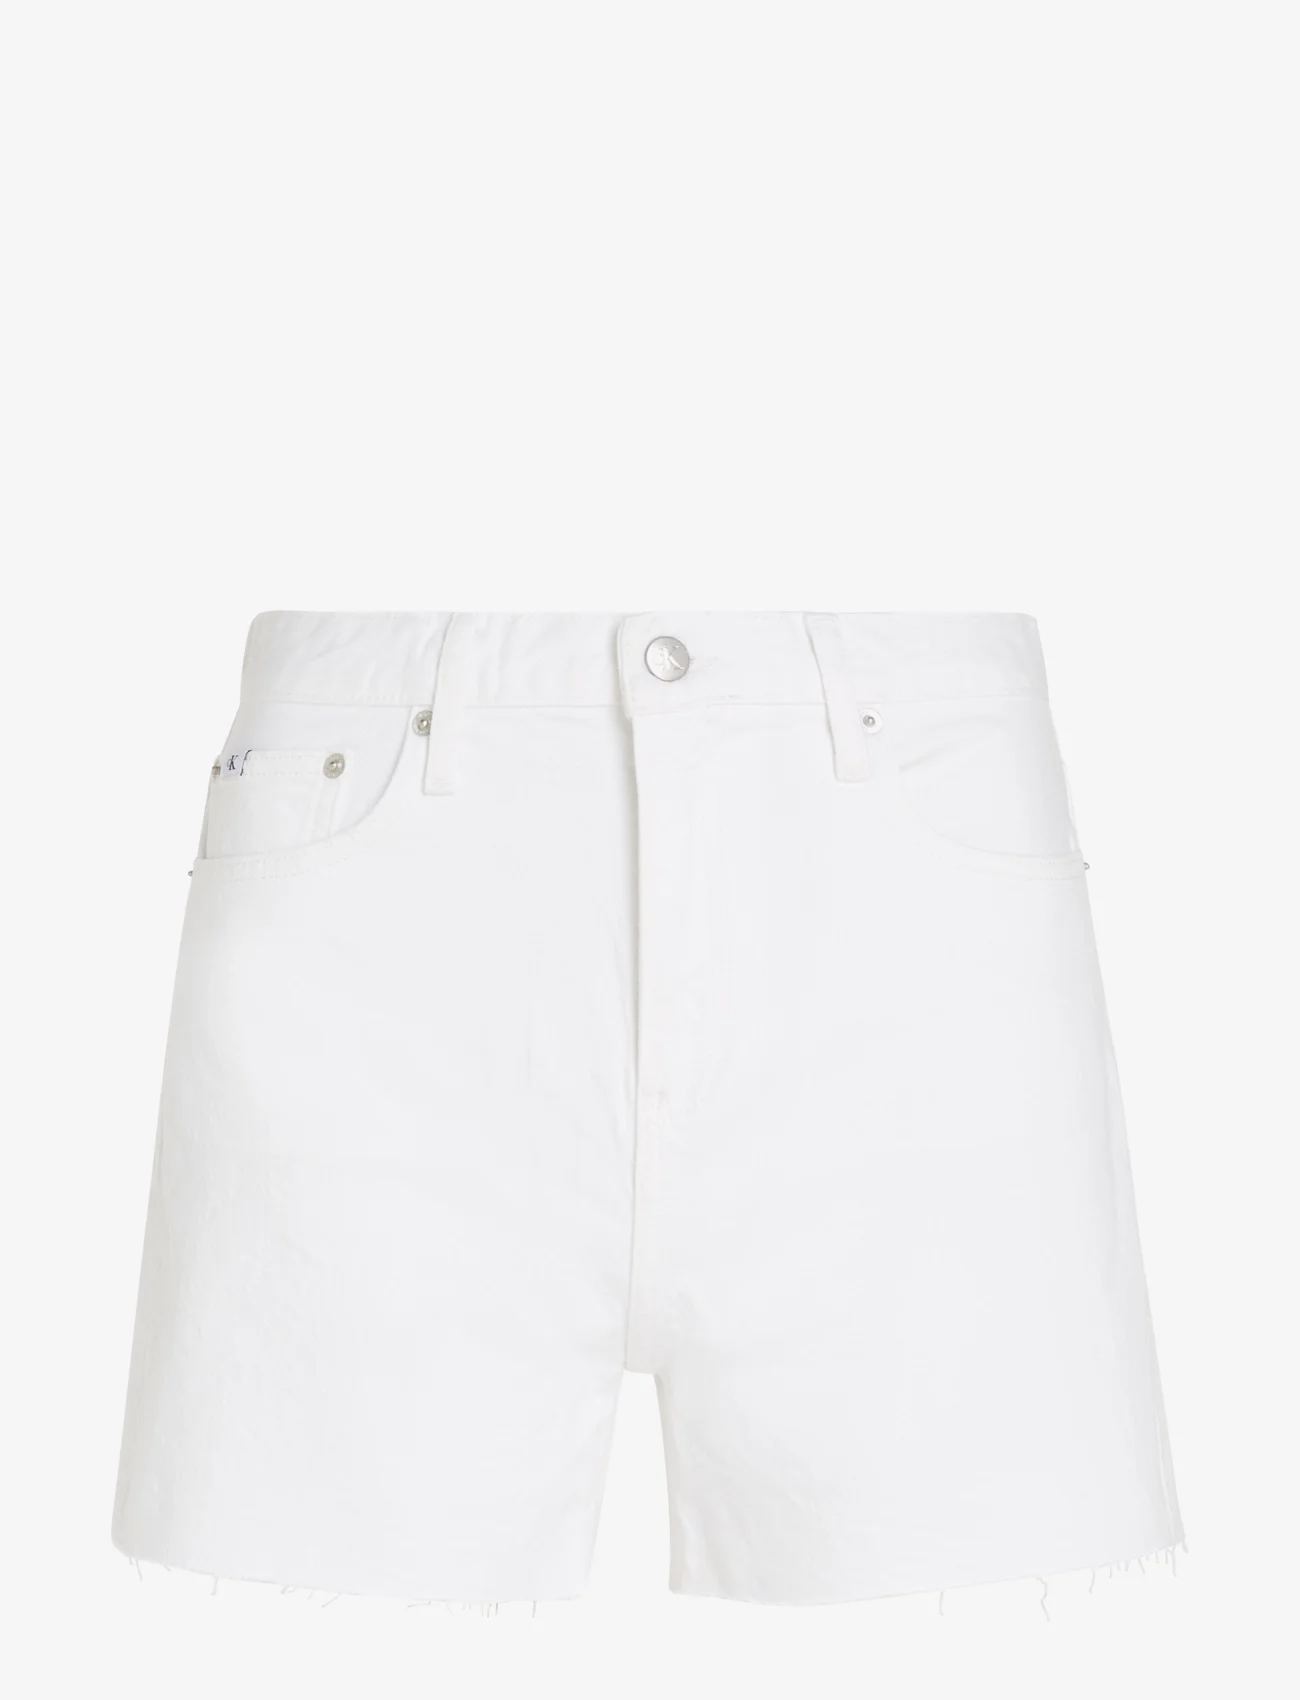 Calvin Klein Jeans - MOM SHORT - džinsa šorti - denim light - 0